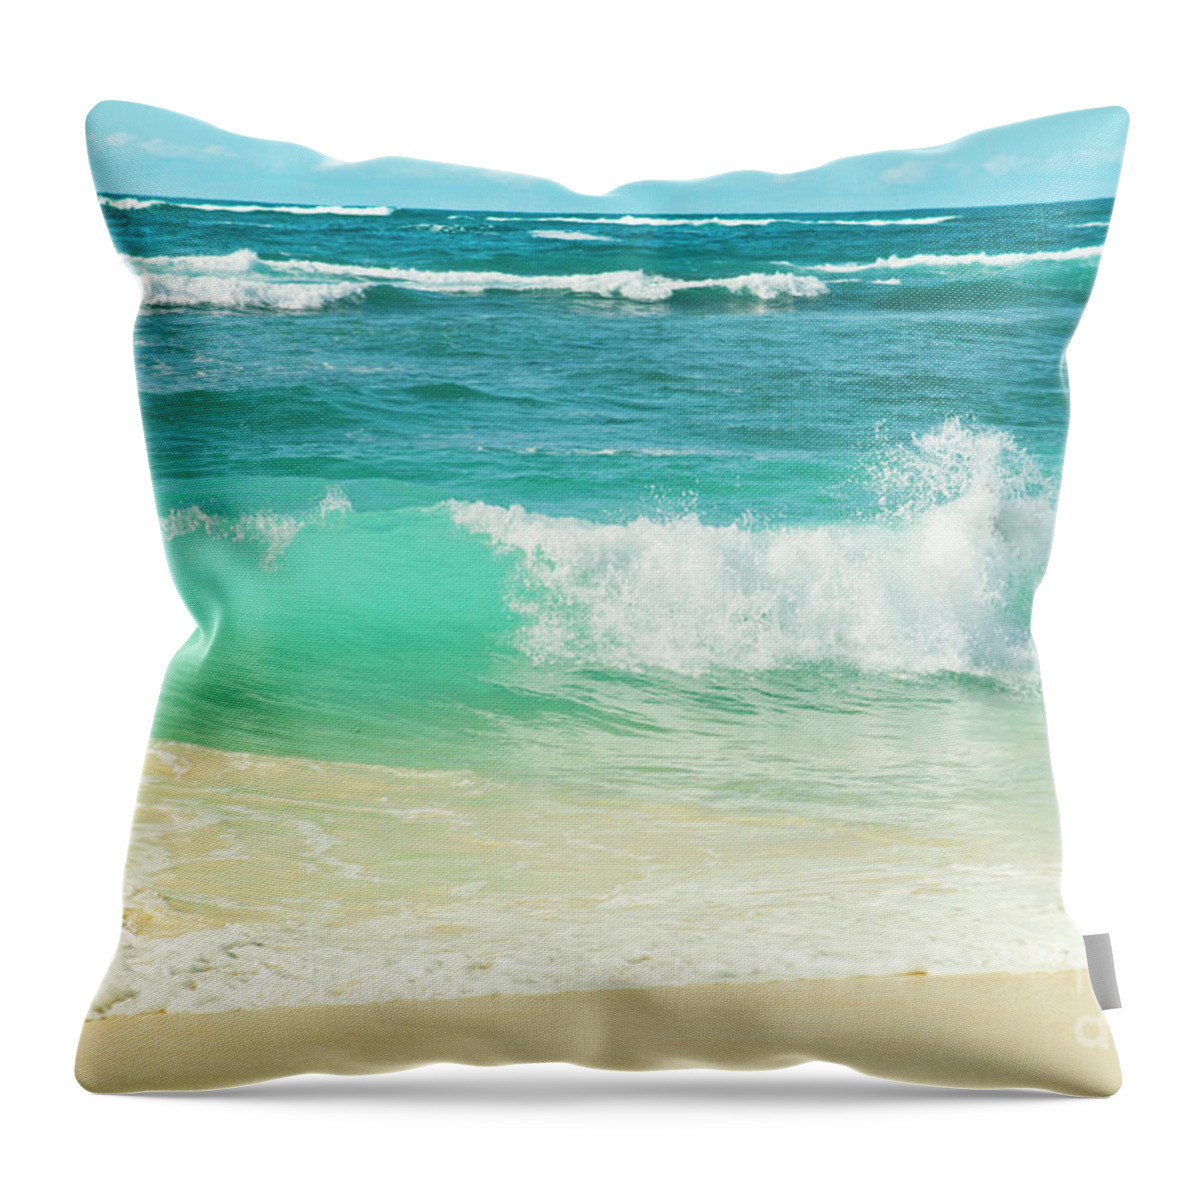 Summer Sea Throw Pillow featuring the photograph Summer Sea by Sharon Mau